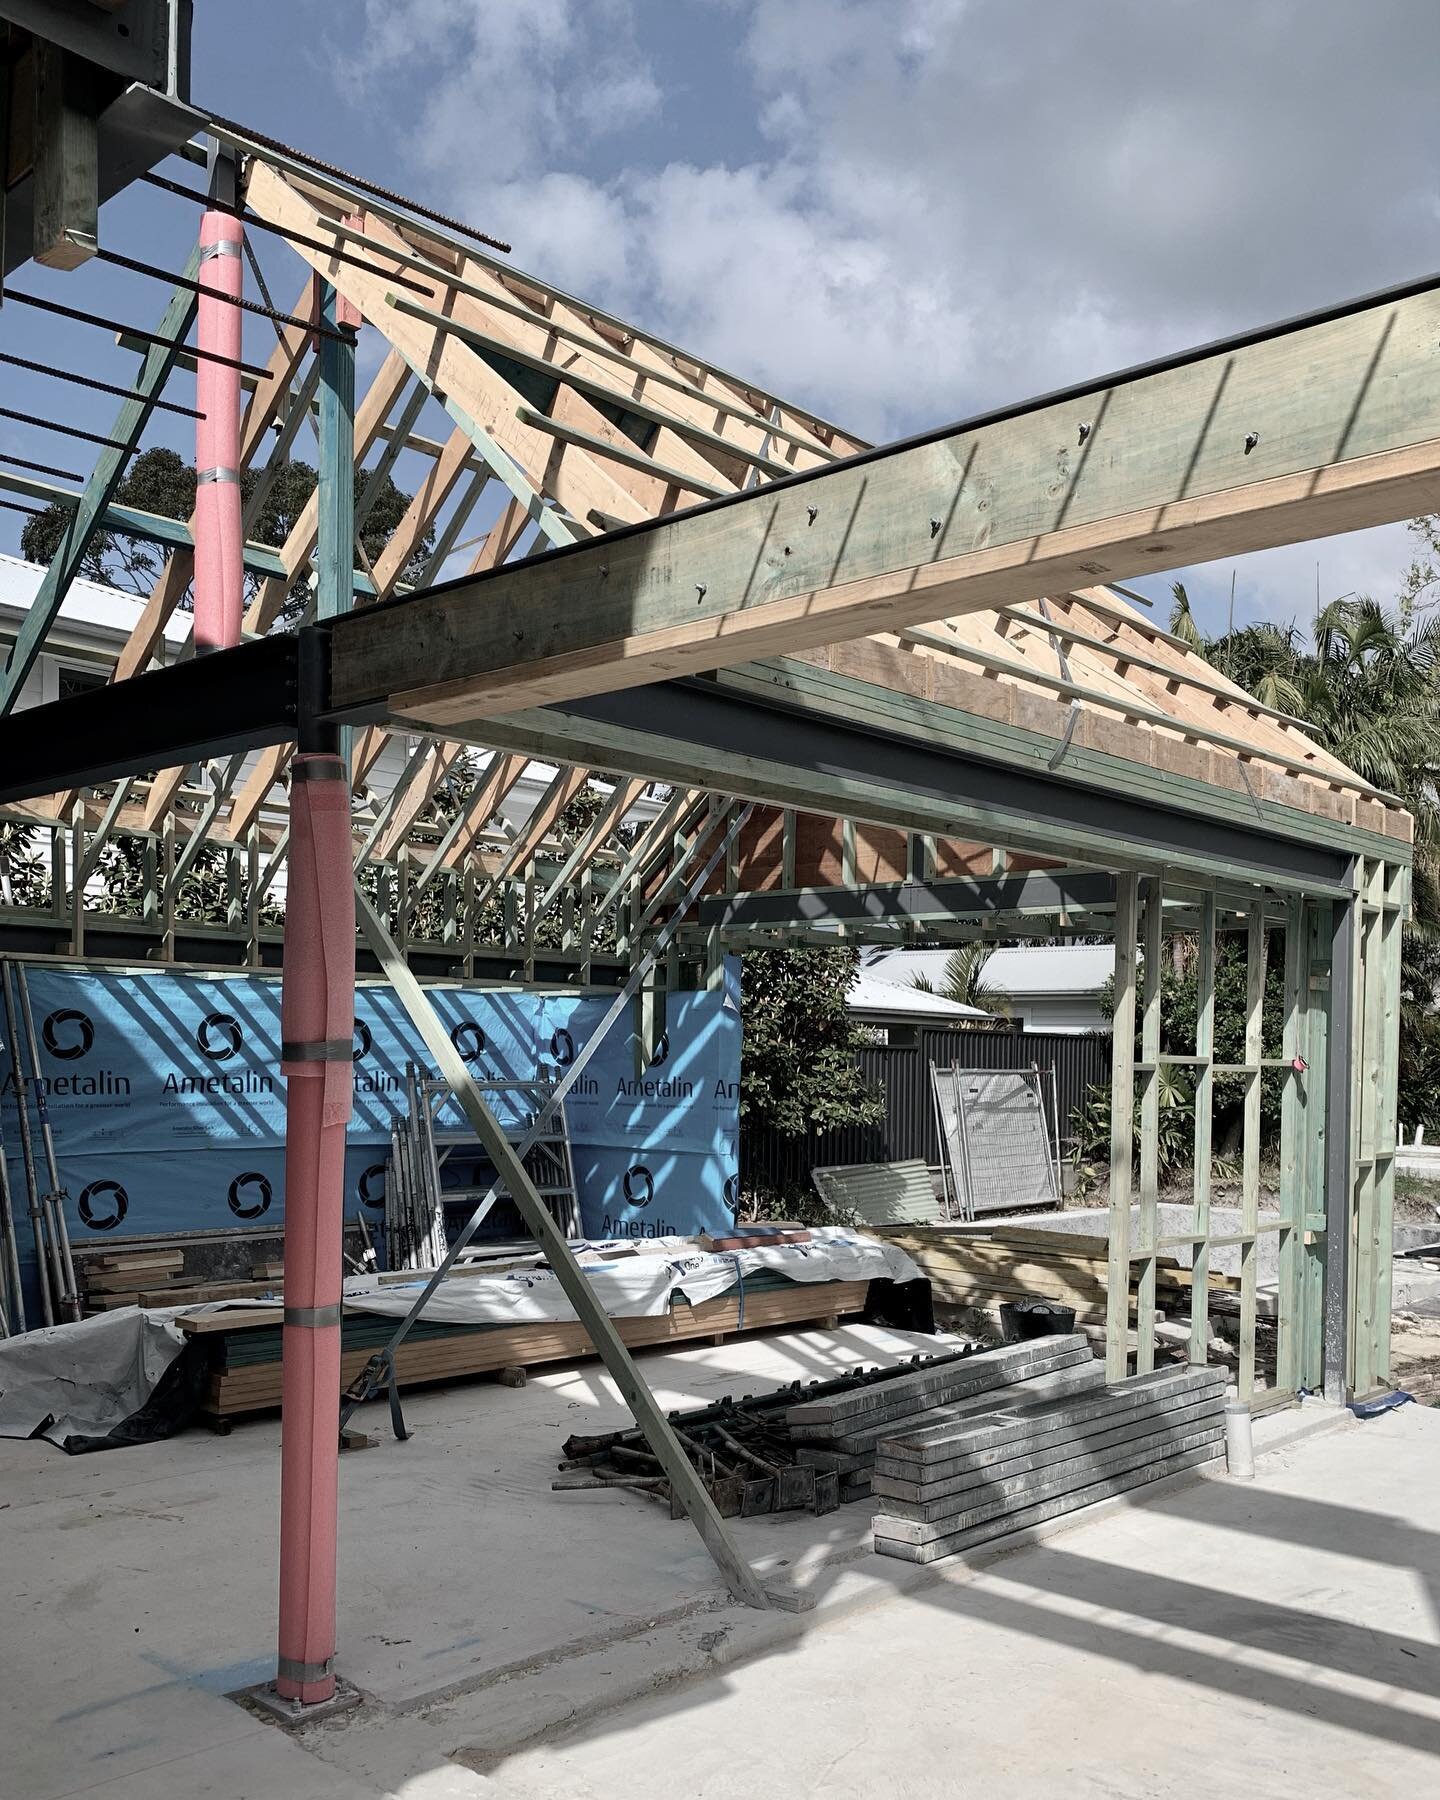 South Cronulla progress with @buildbydesign.bbd @sitedesign_studios &hellip;
#pavilion #architecture #construction #design #craft #create #sutherlandshire #cronulla #sydney #australianarchitecture #archdaily #barch